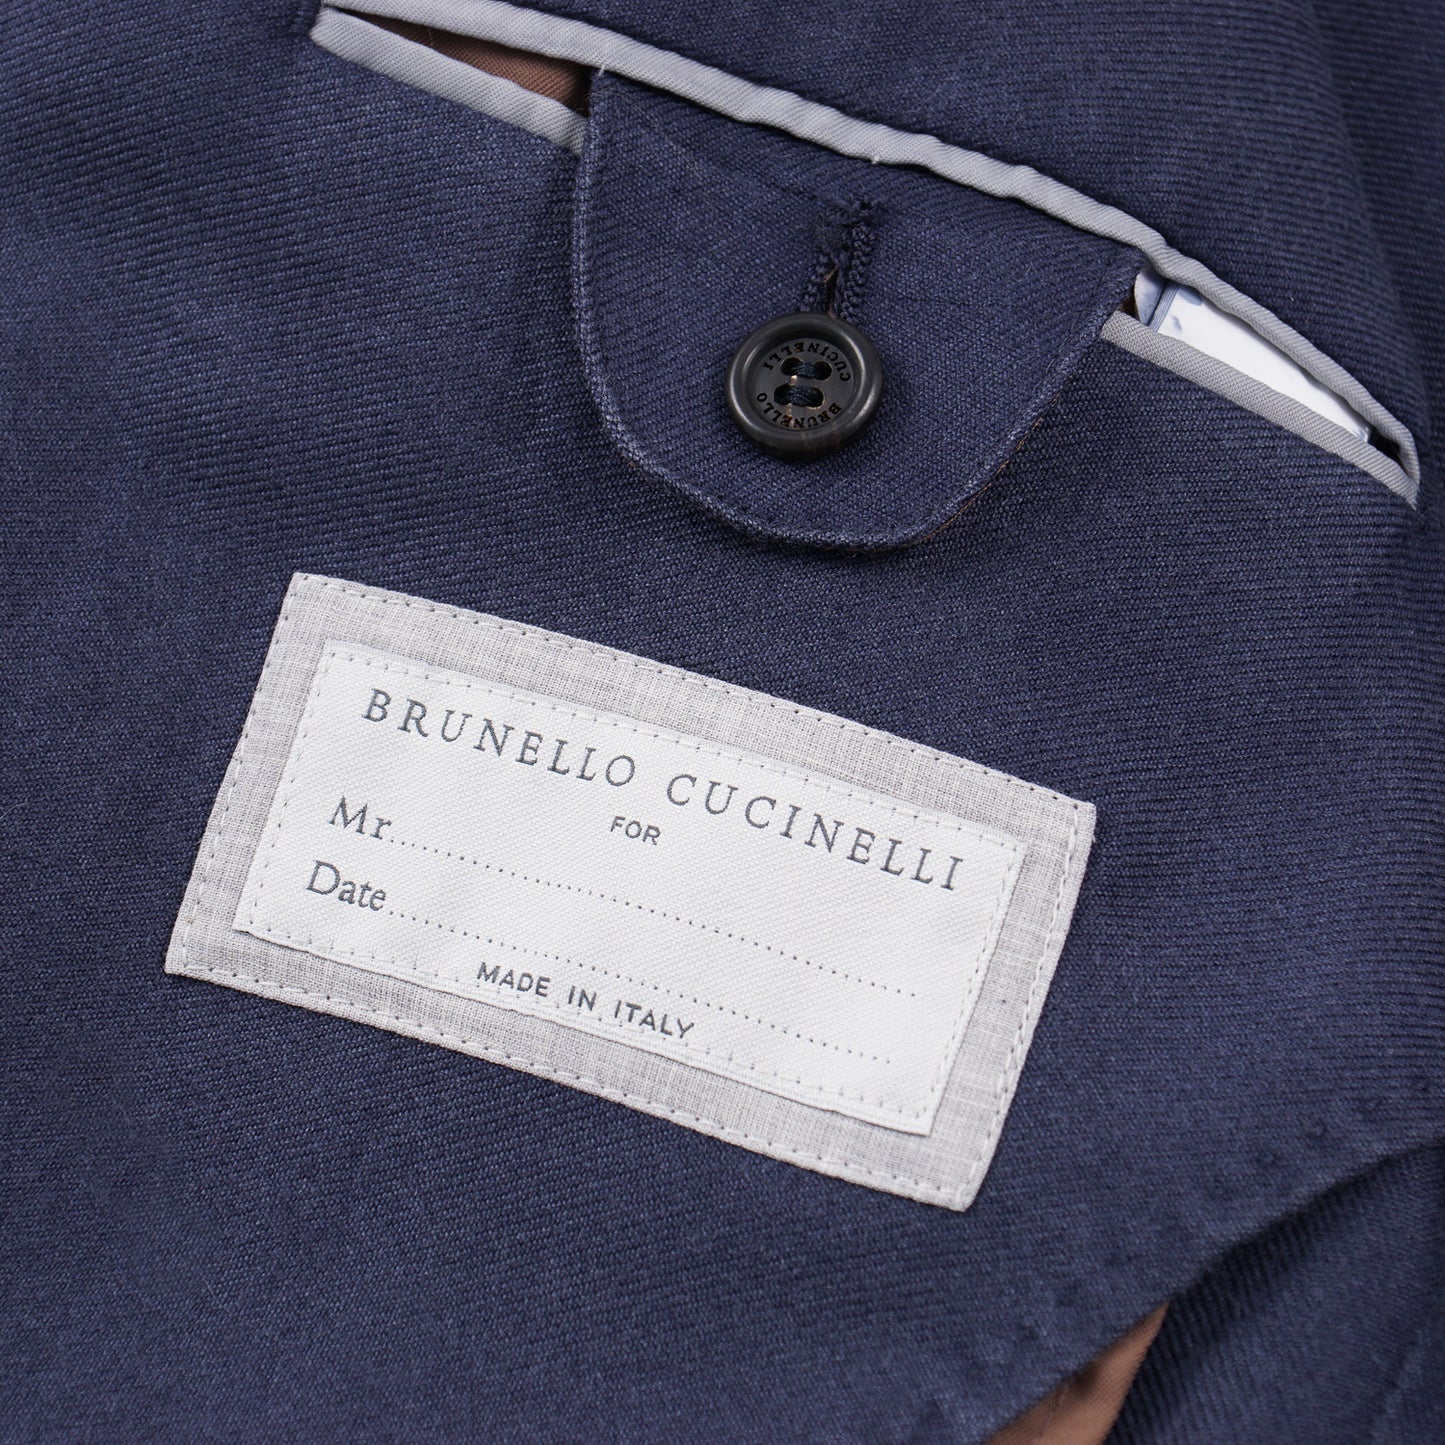 Brunello Cucinelli Unstructured Cashmere Sport Coat - Top Shelf Apparel